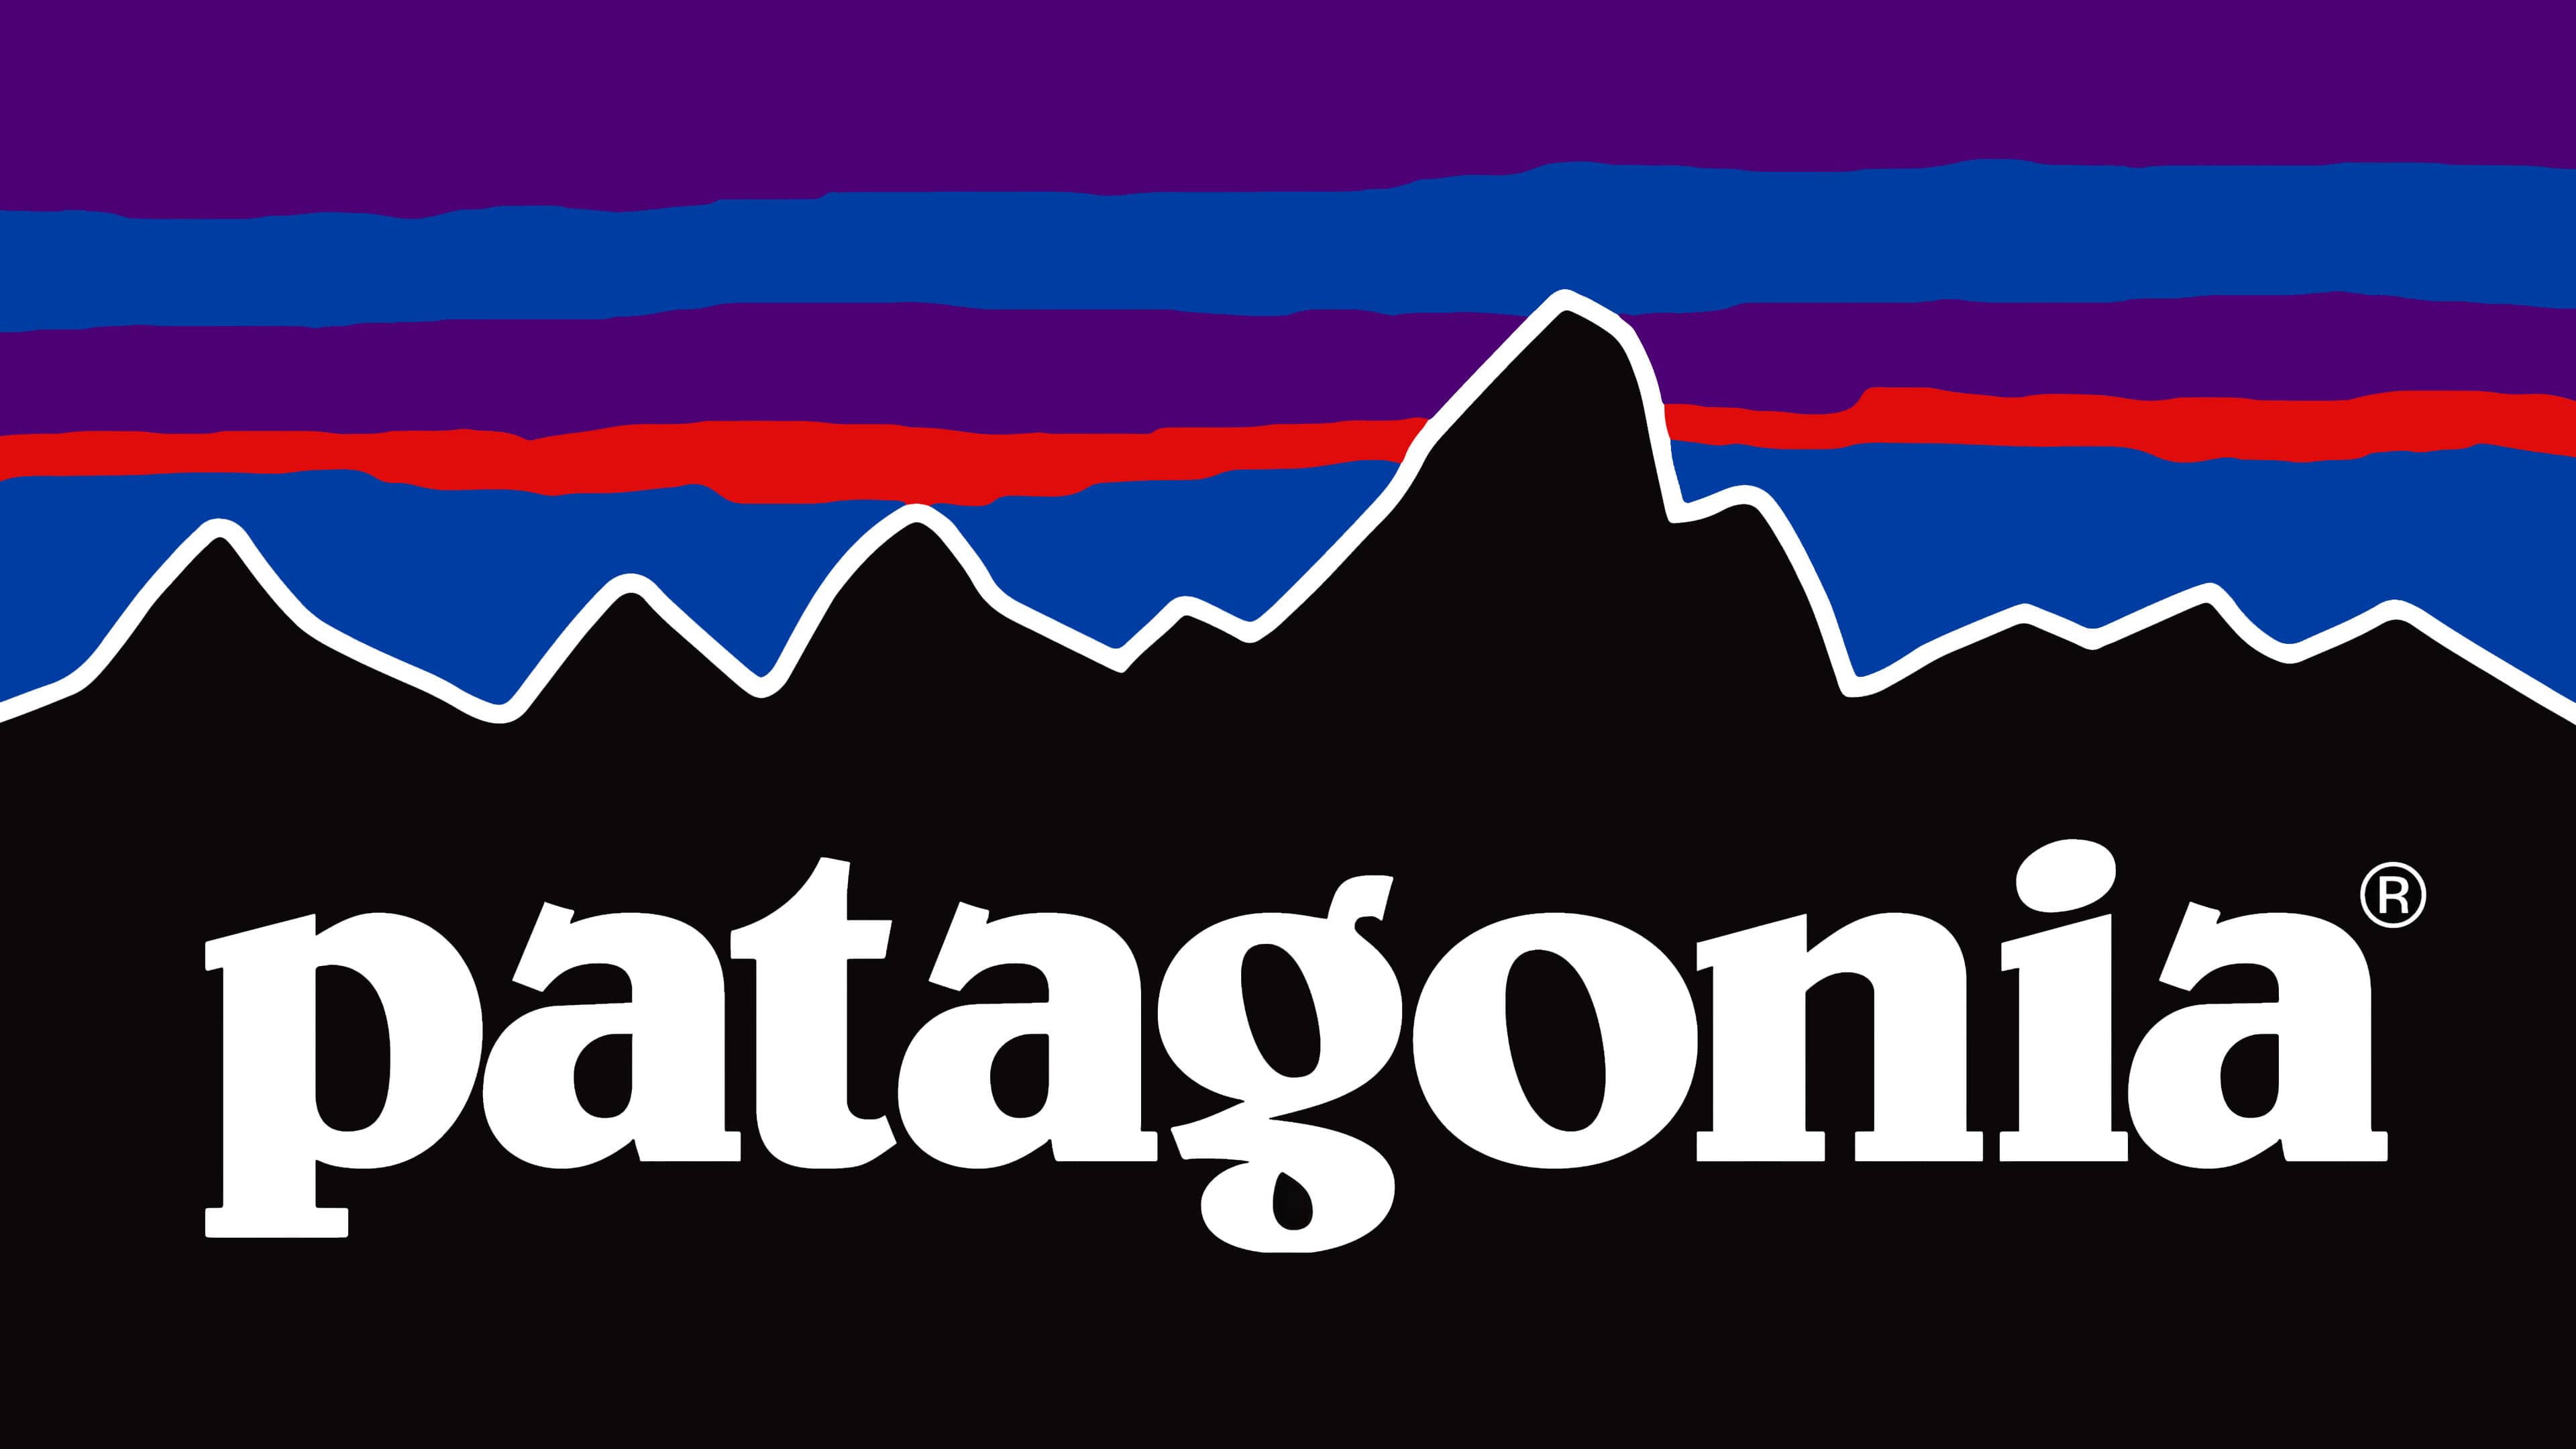 Patagonia Logo | Significado, HistÃ³ria e PNG